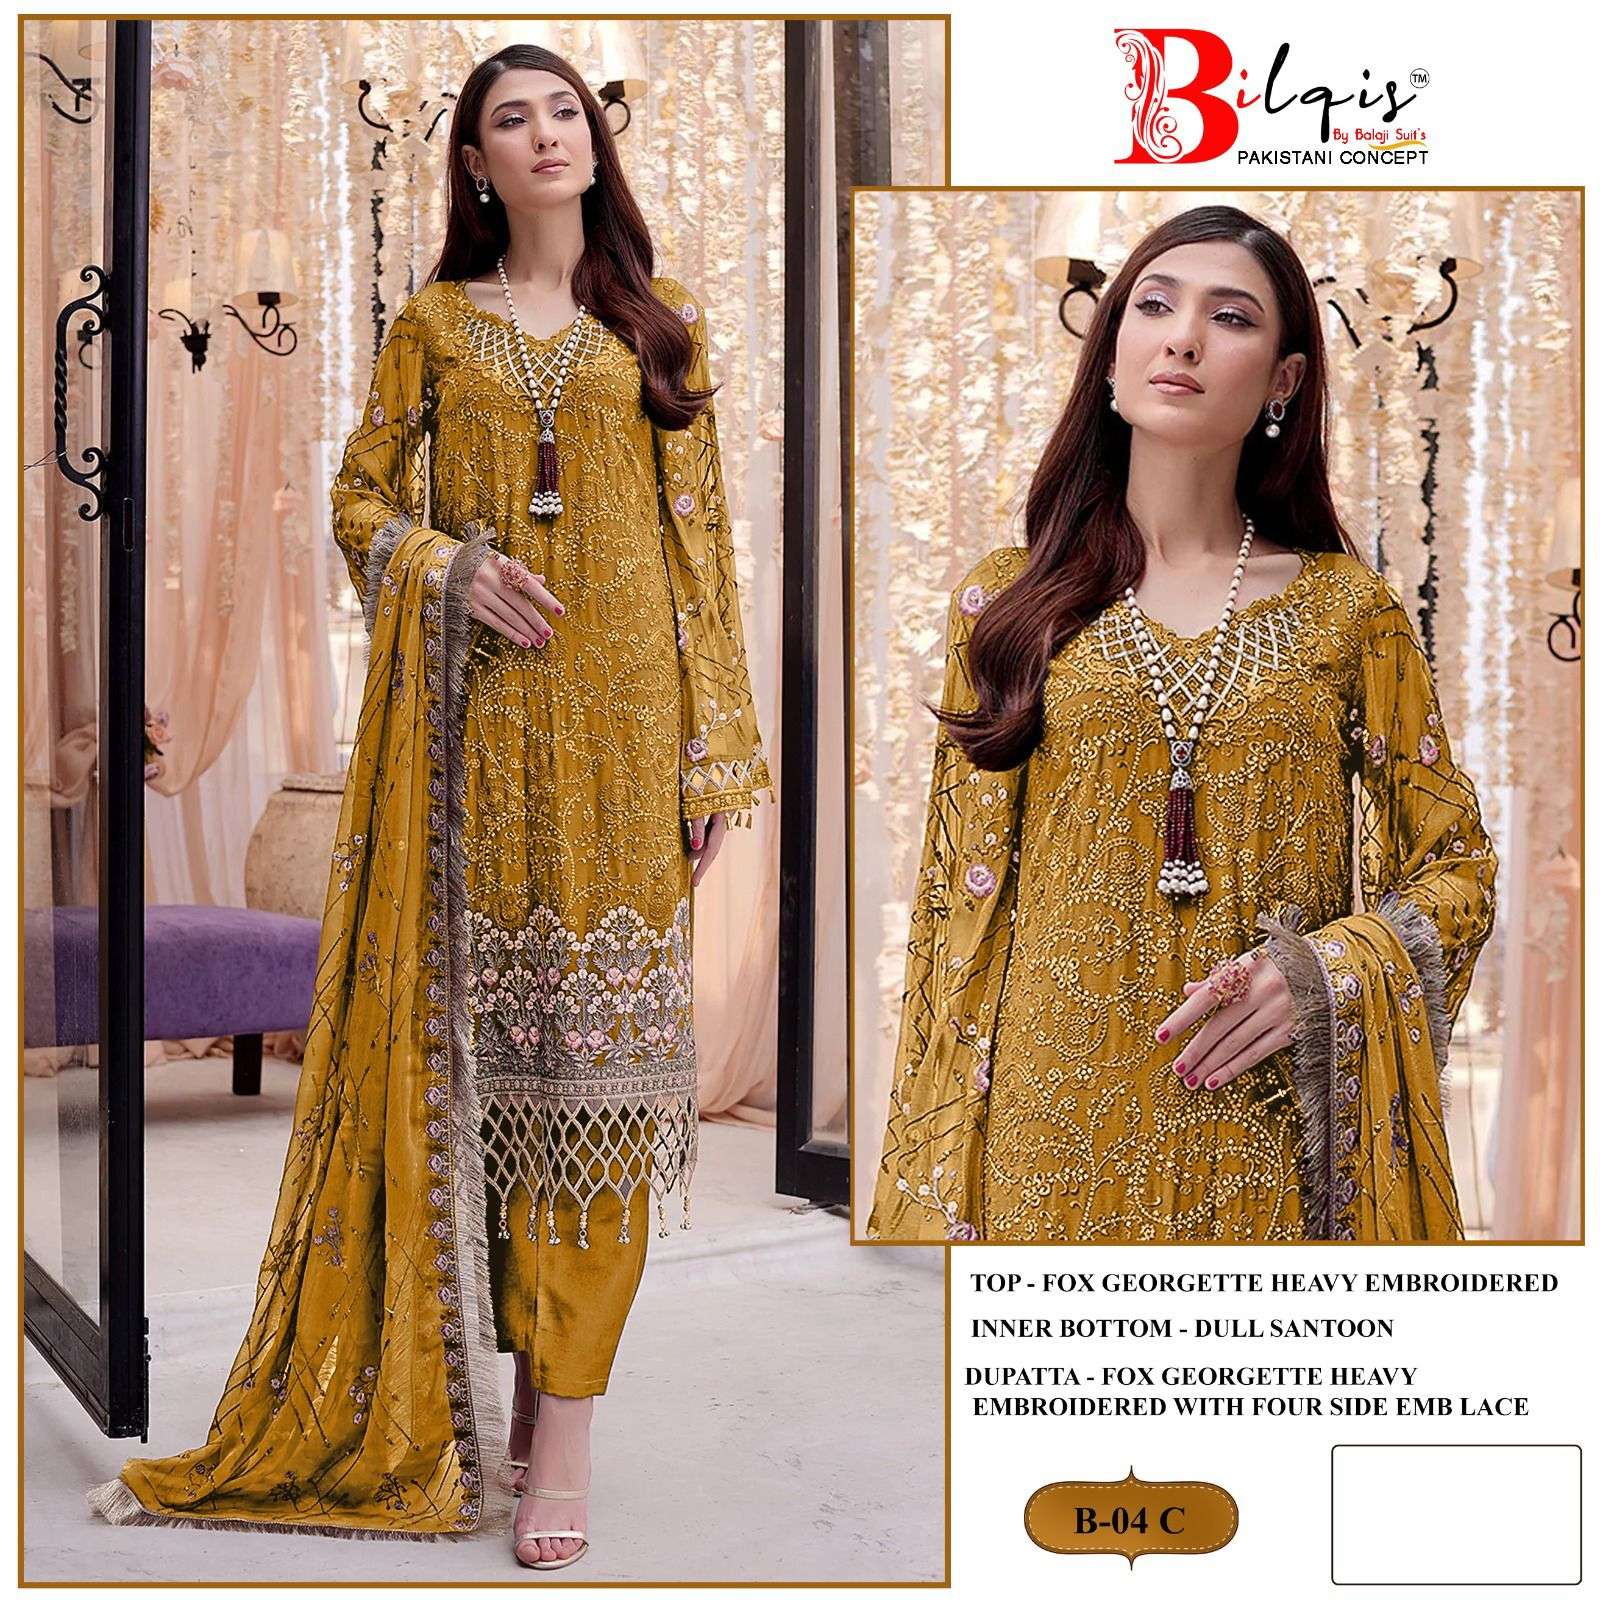 Bilqis B 04 Faux Georgette Embroidered Pakistani Suits Wholesale catalog